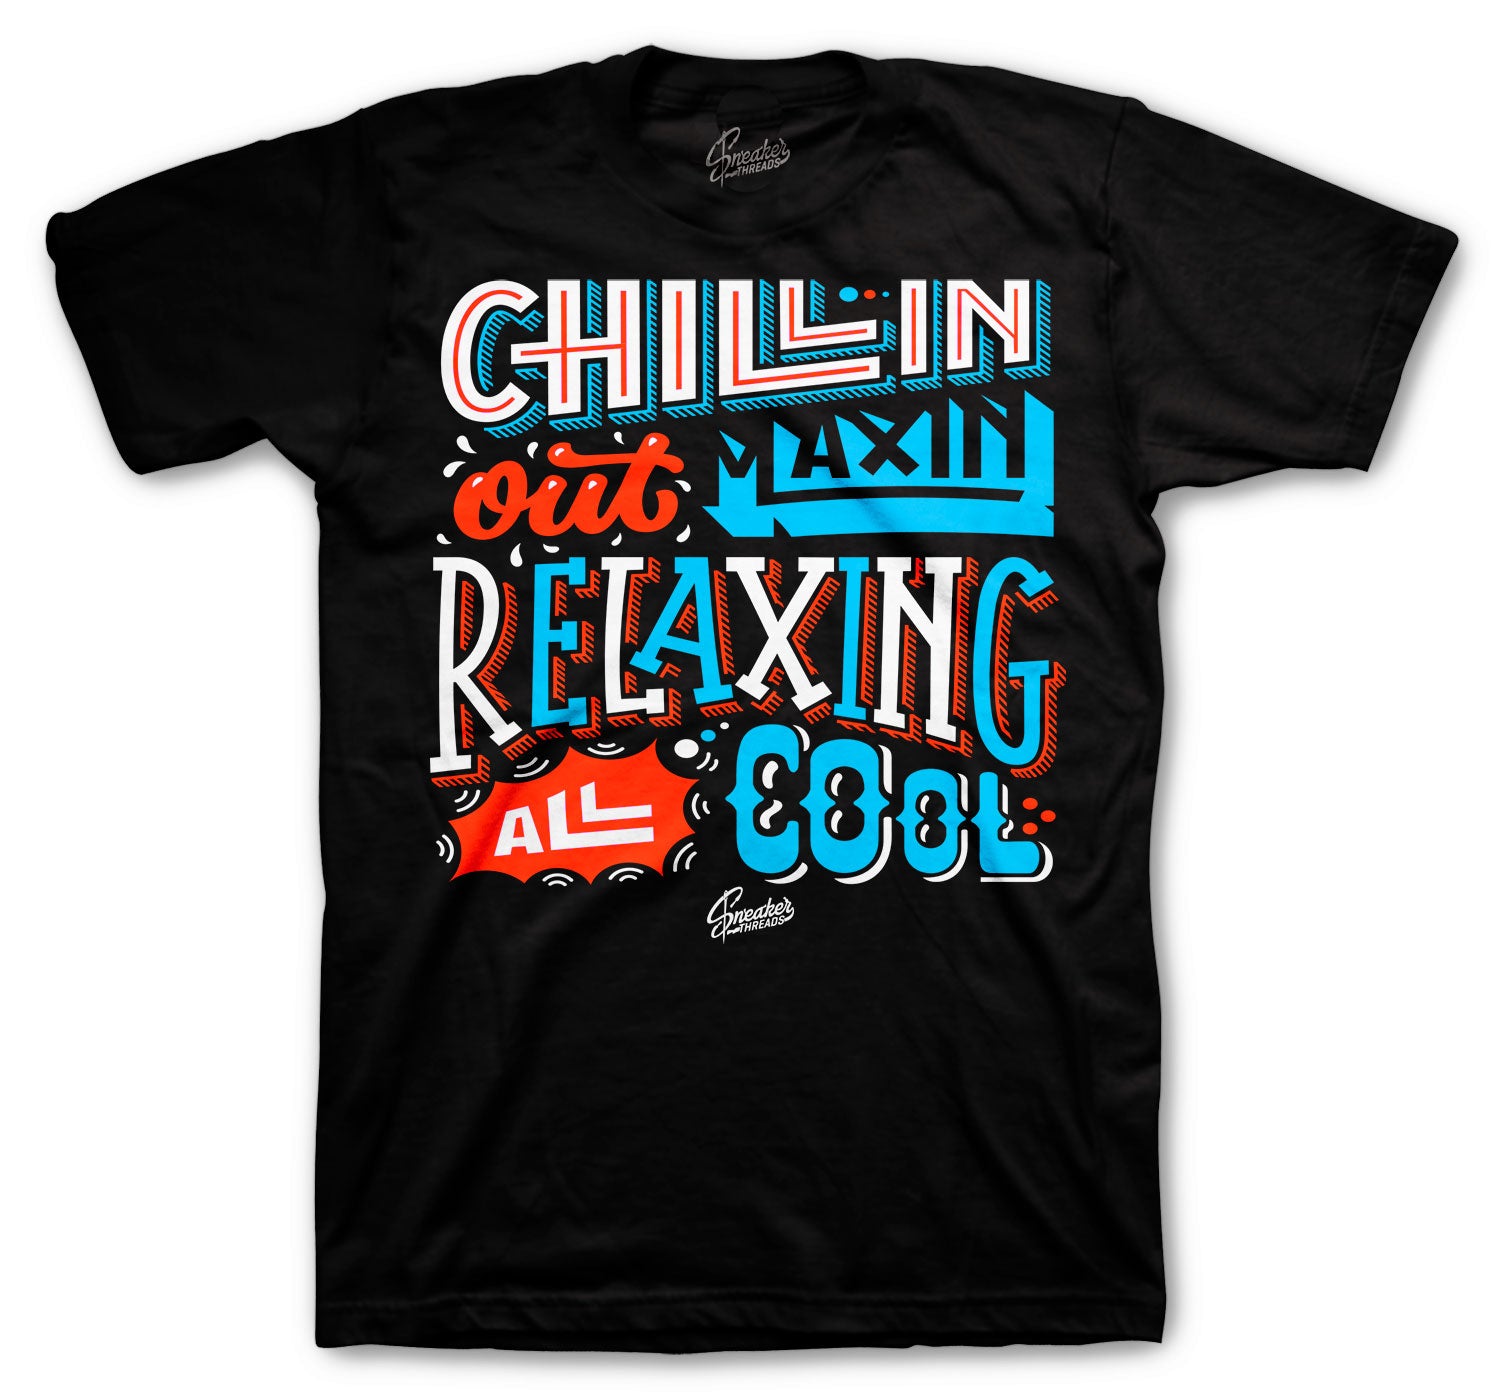 Air Max 2090 Platinum Shirt - Chillin Relaxin - Black